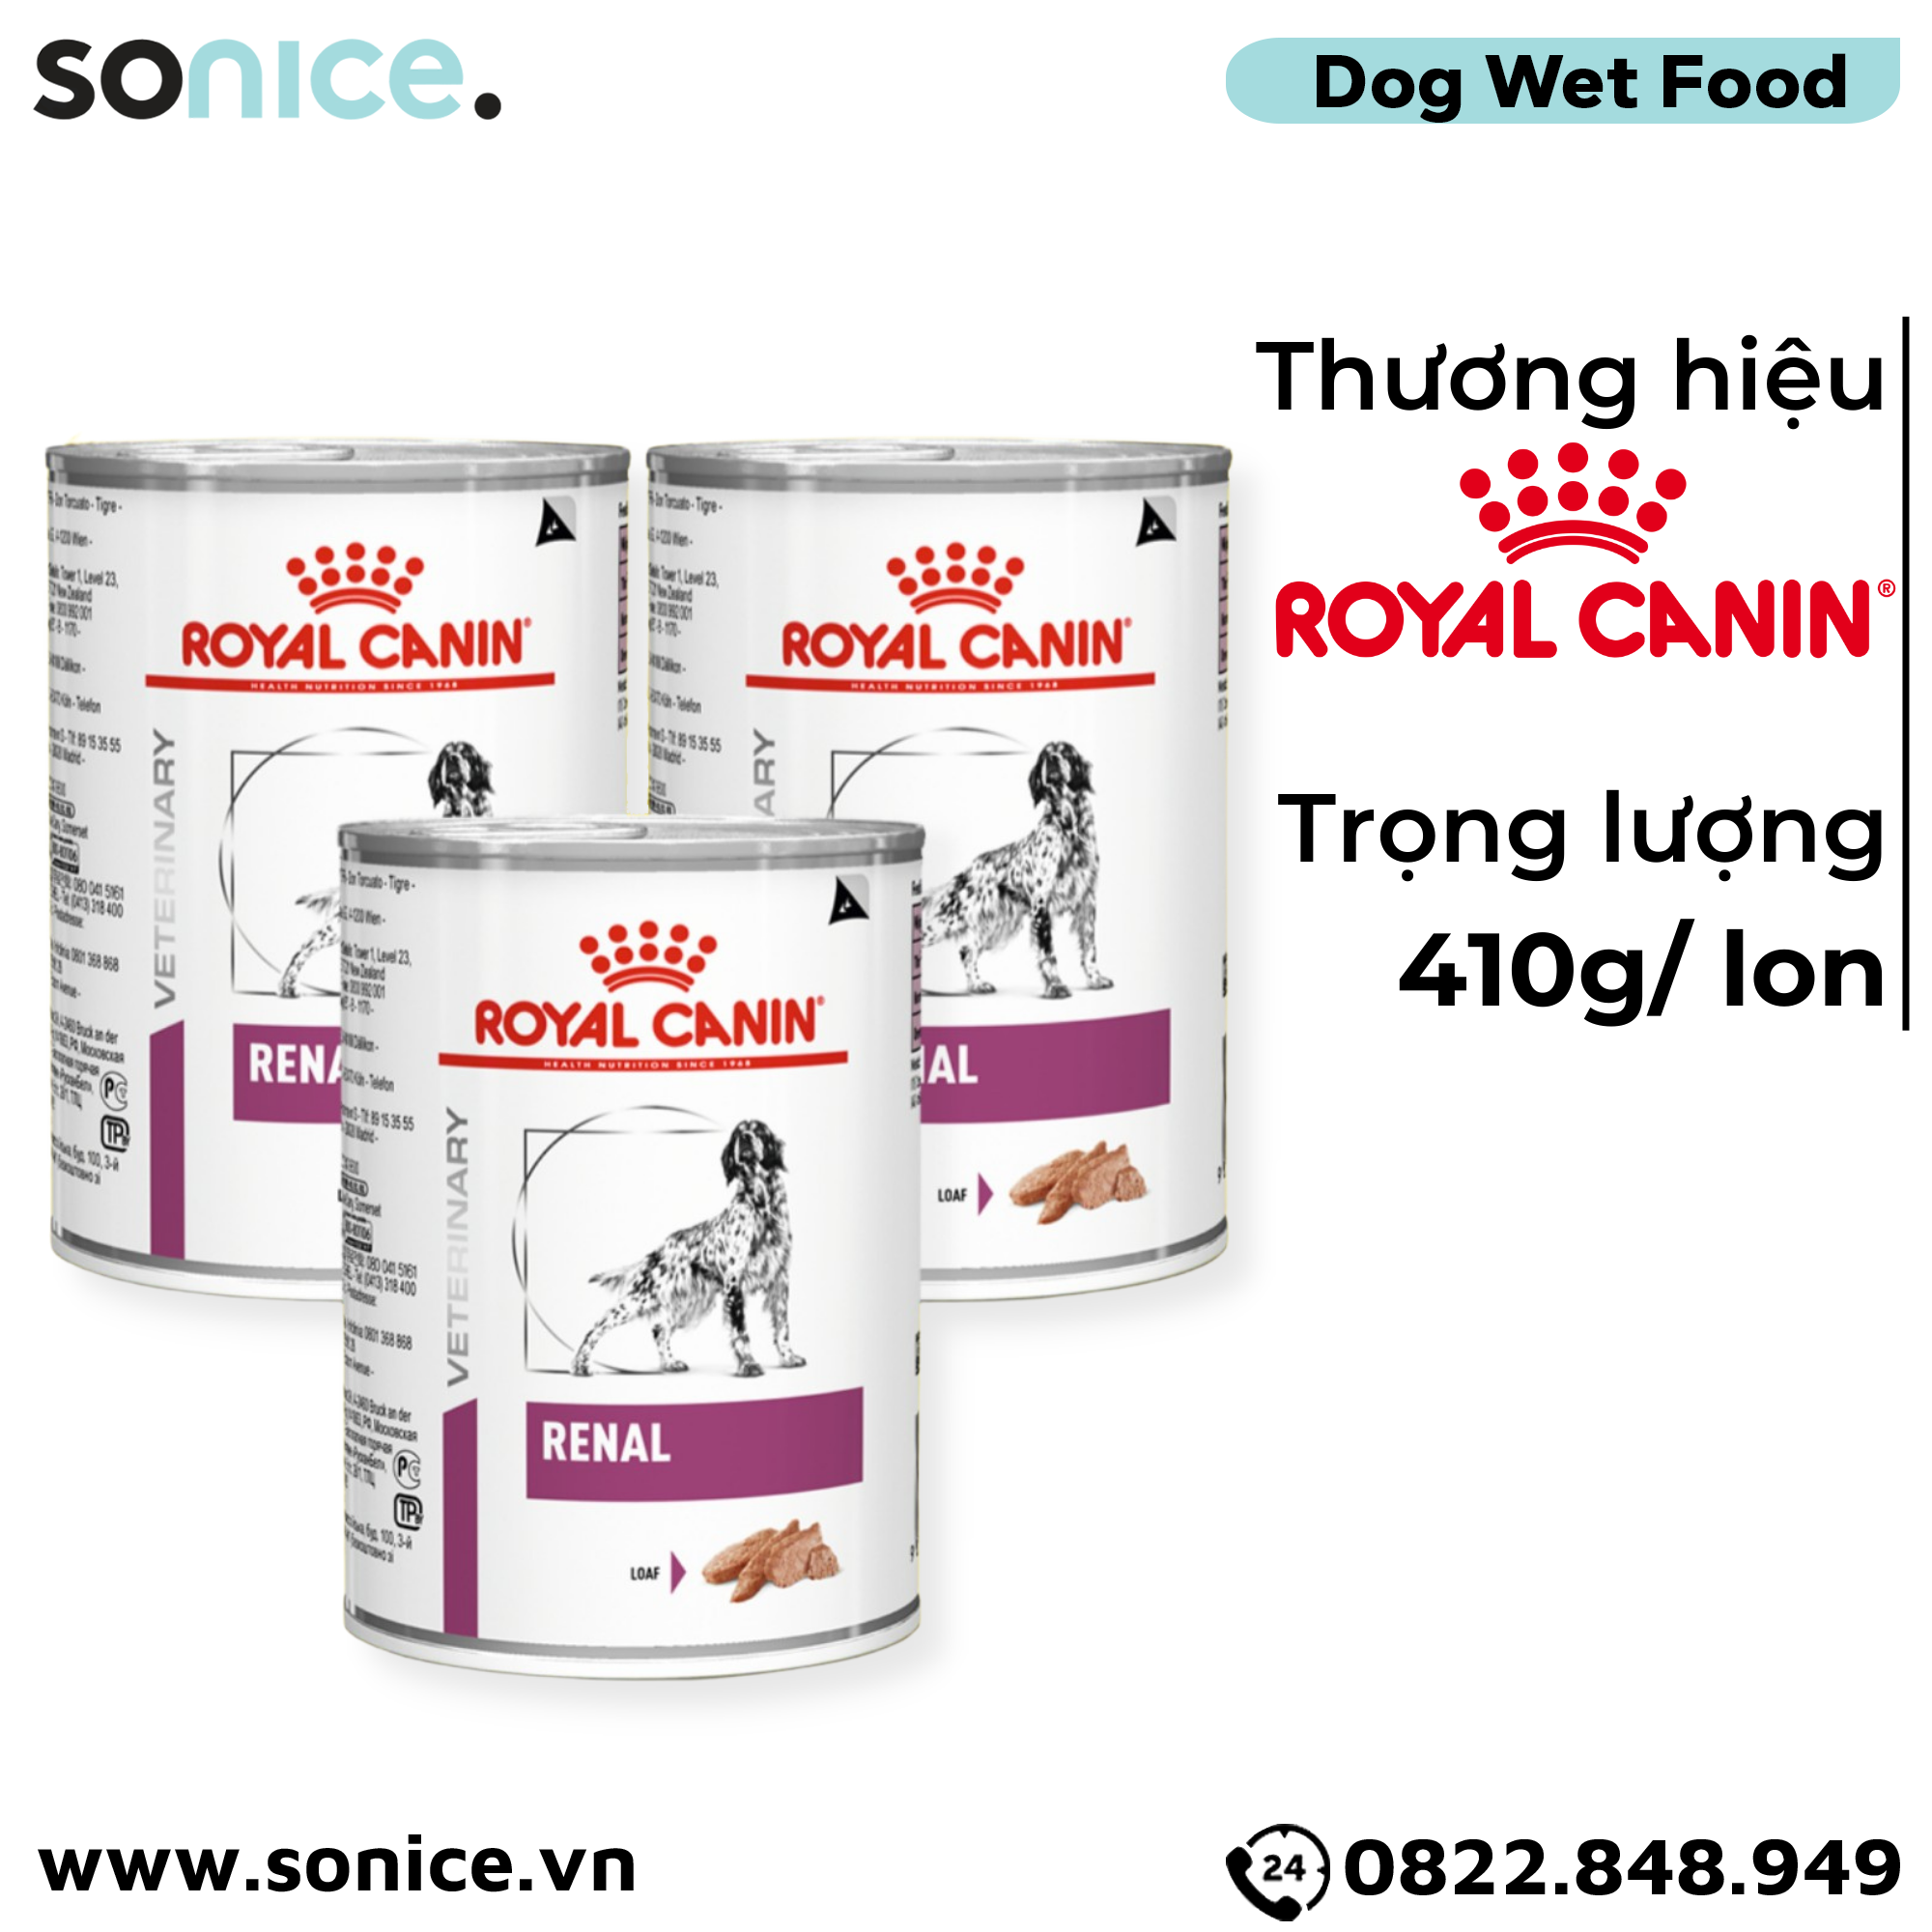  Combo Pate chó Royal Canin Renal Canine Loaf 410g - Hỗ trợ trị sỏi thận Petmall - 3 lon SONICE. 